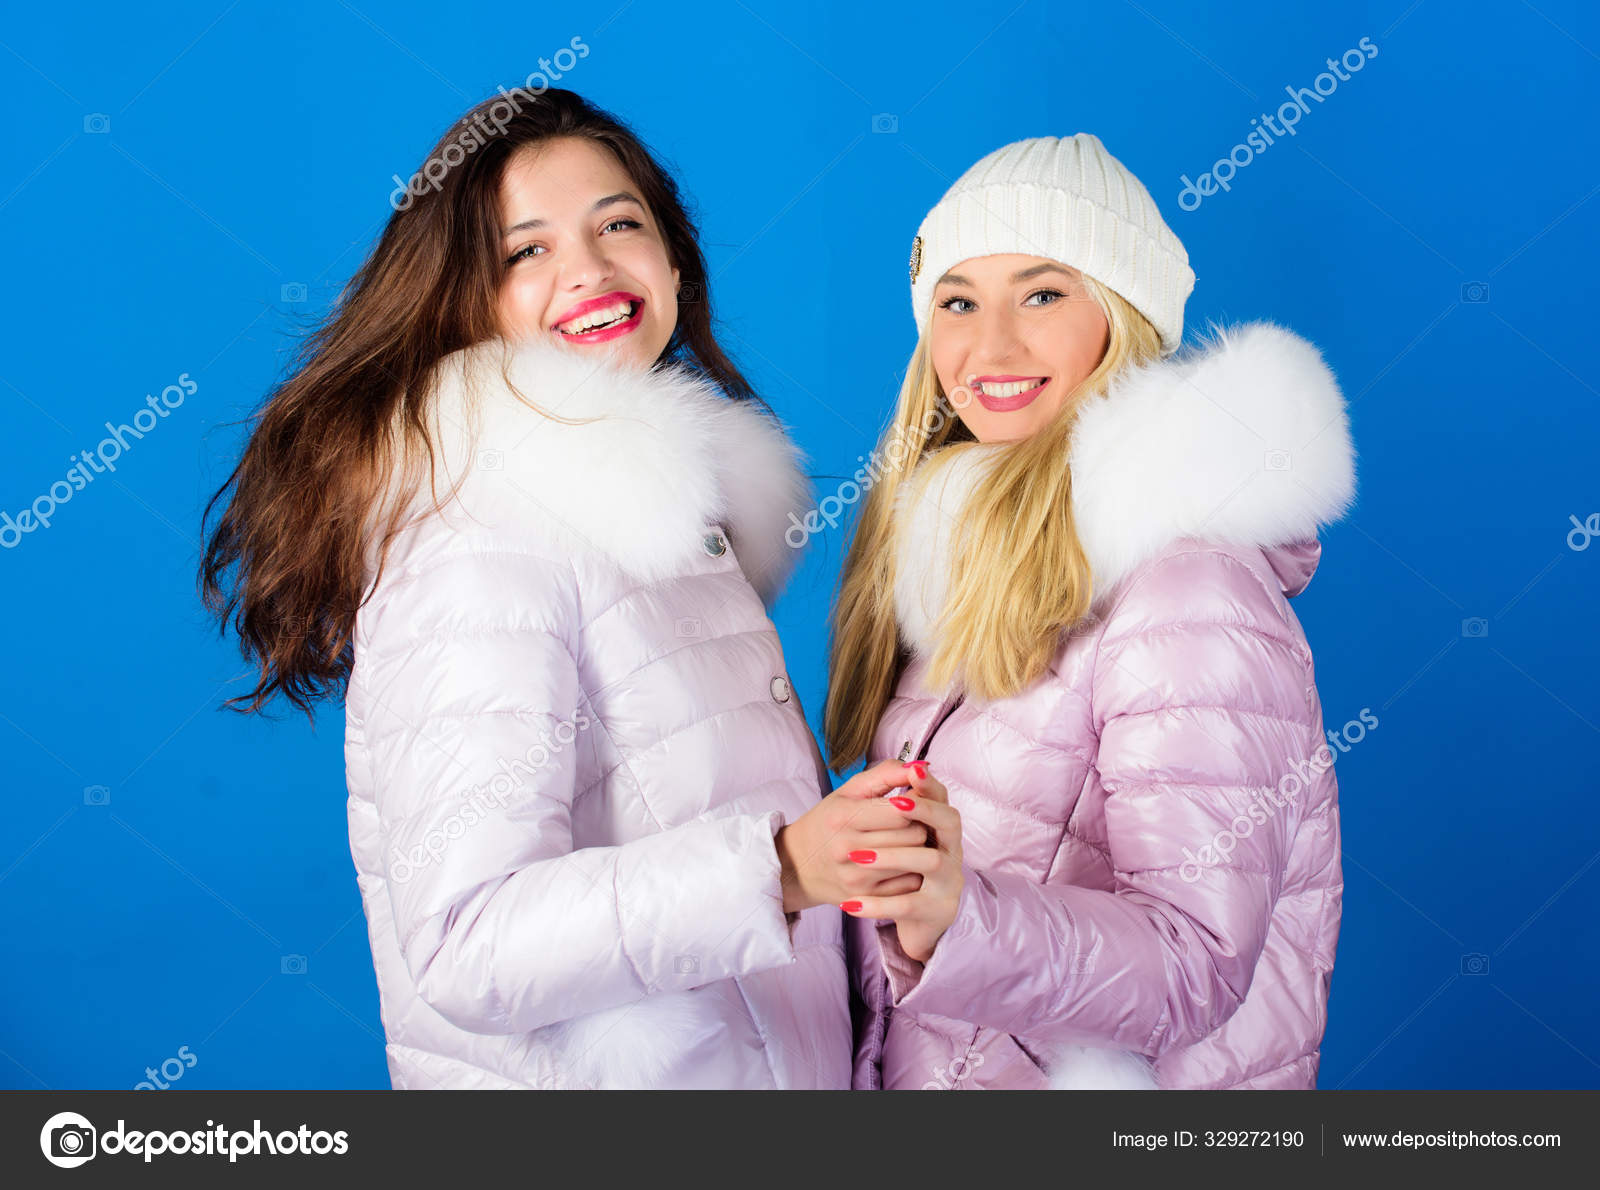 https://st3.depositphotos.com/2760050/32927/i/1600/depositphotos_329272190-stock-photo-fashion-friends-winter-clothes-women.jpg